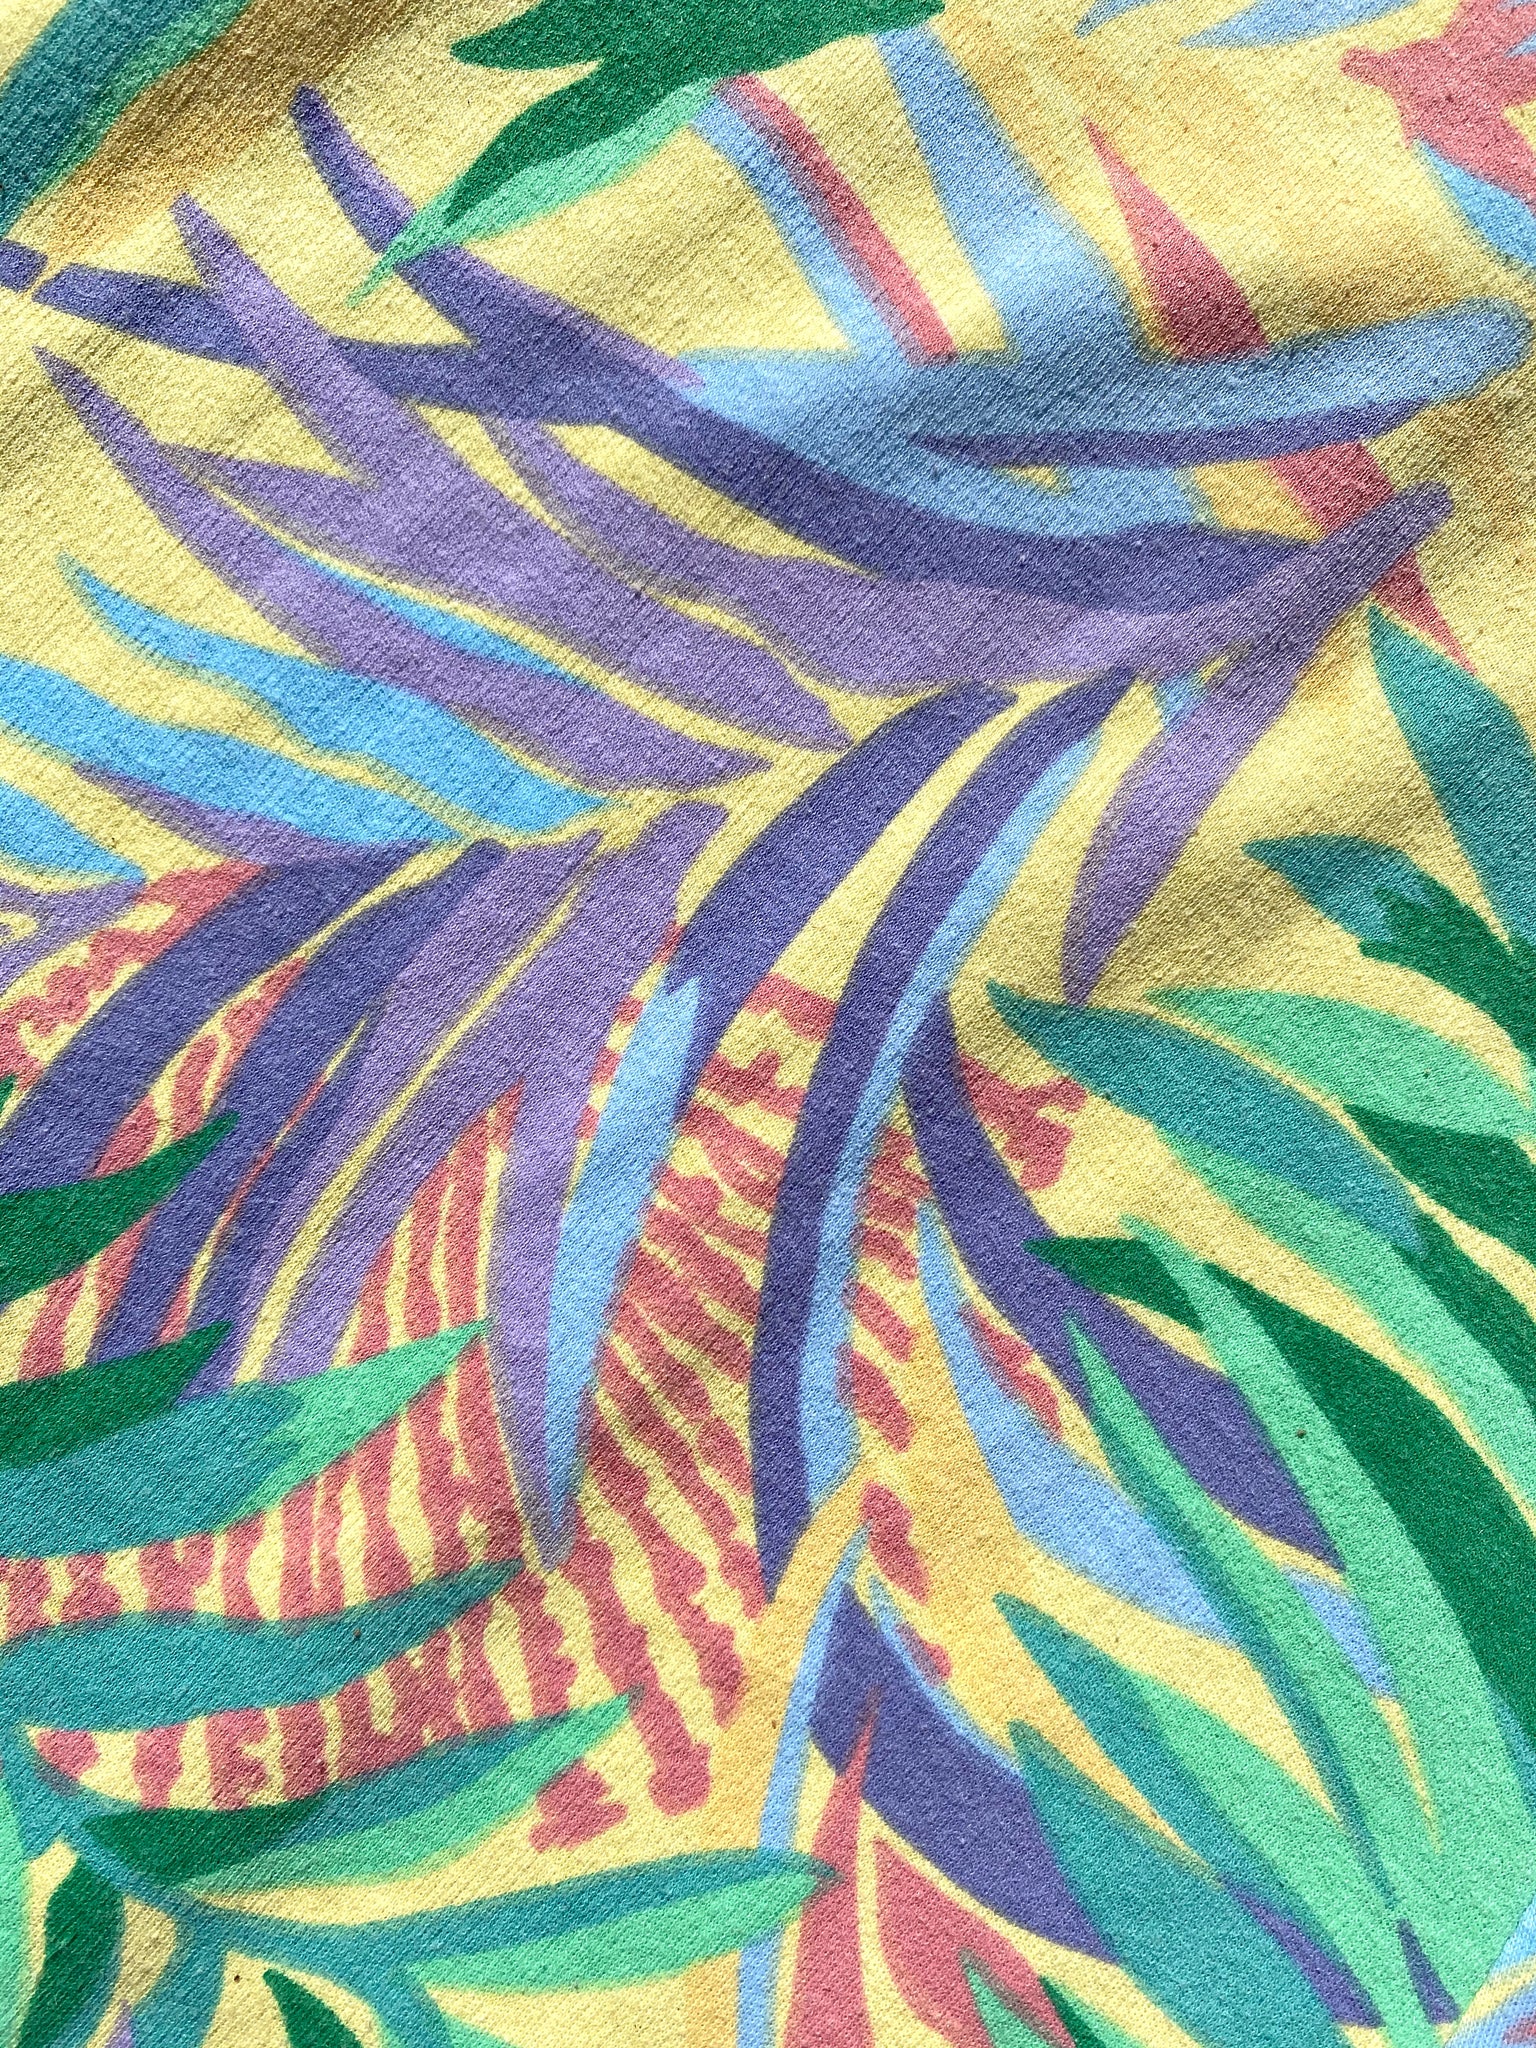 VINTAGE: Sun Dress - Pastel Palms